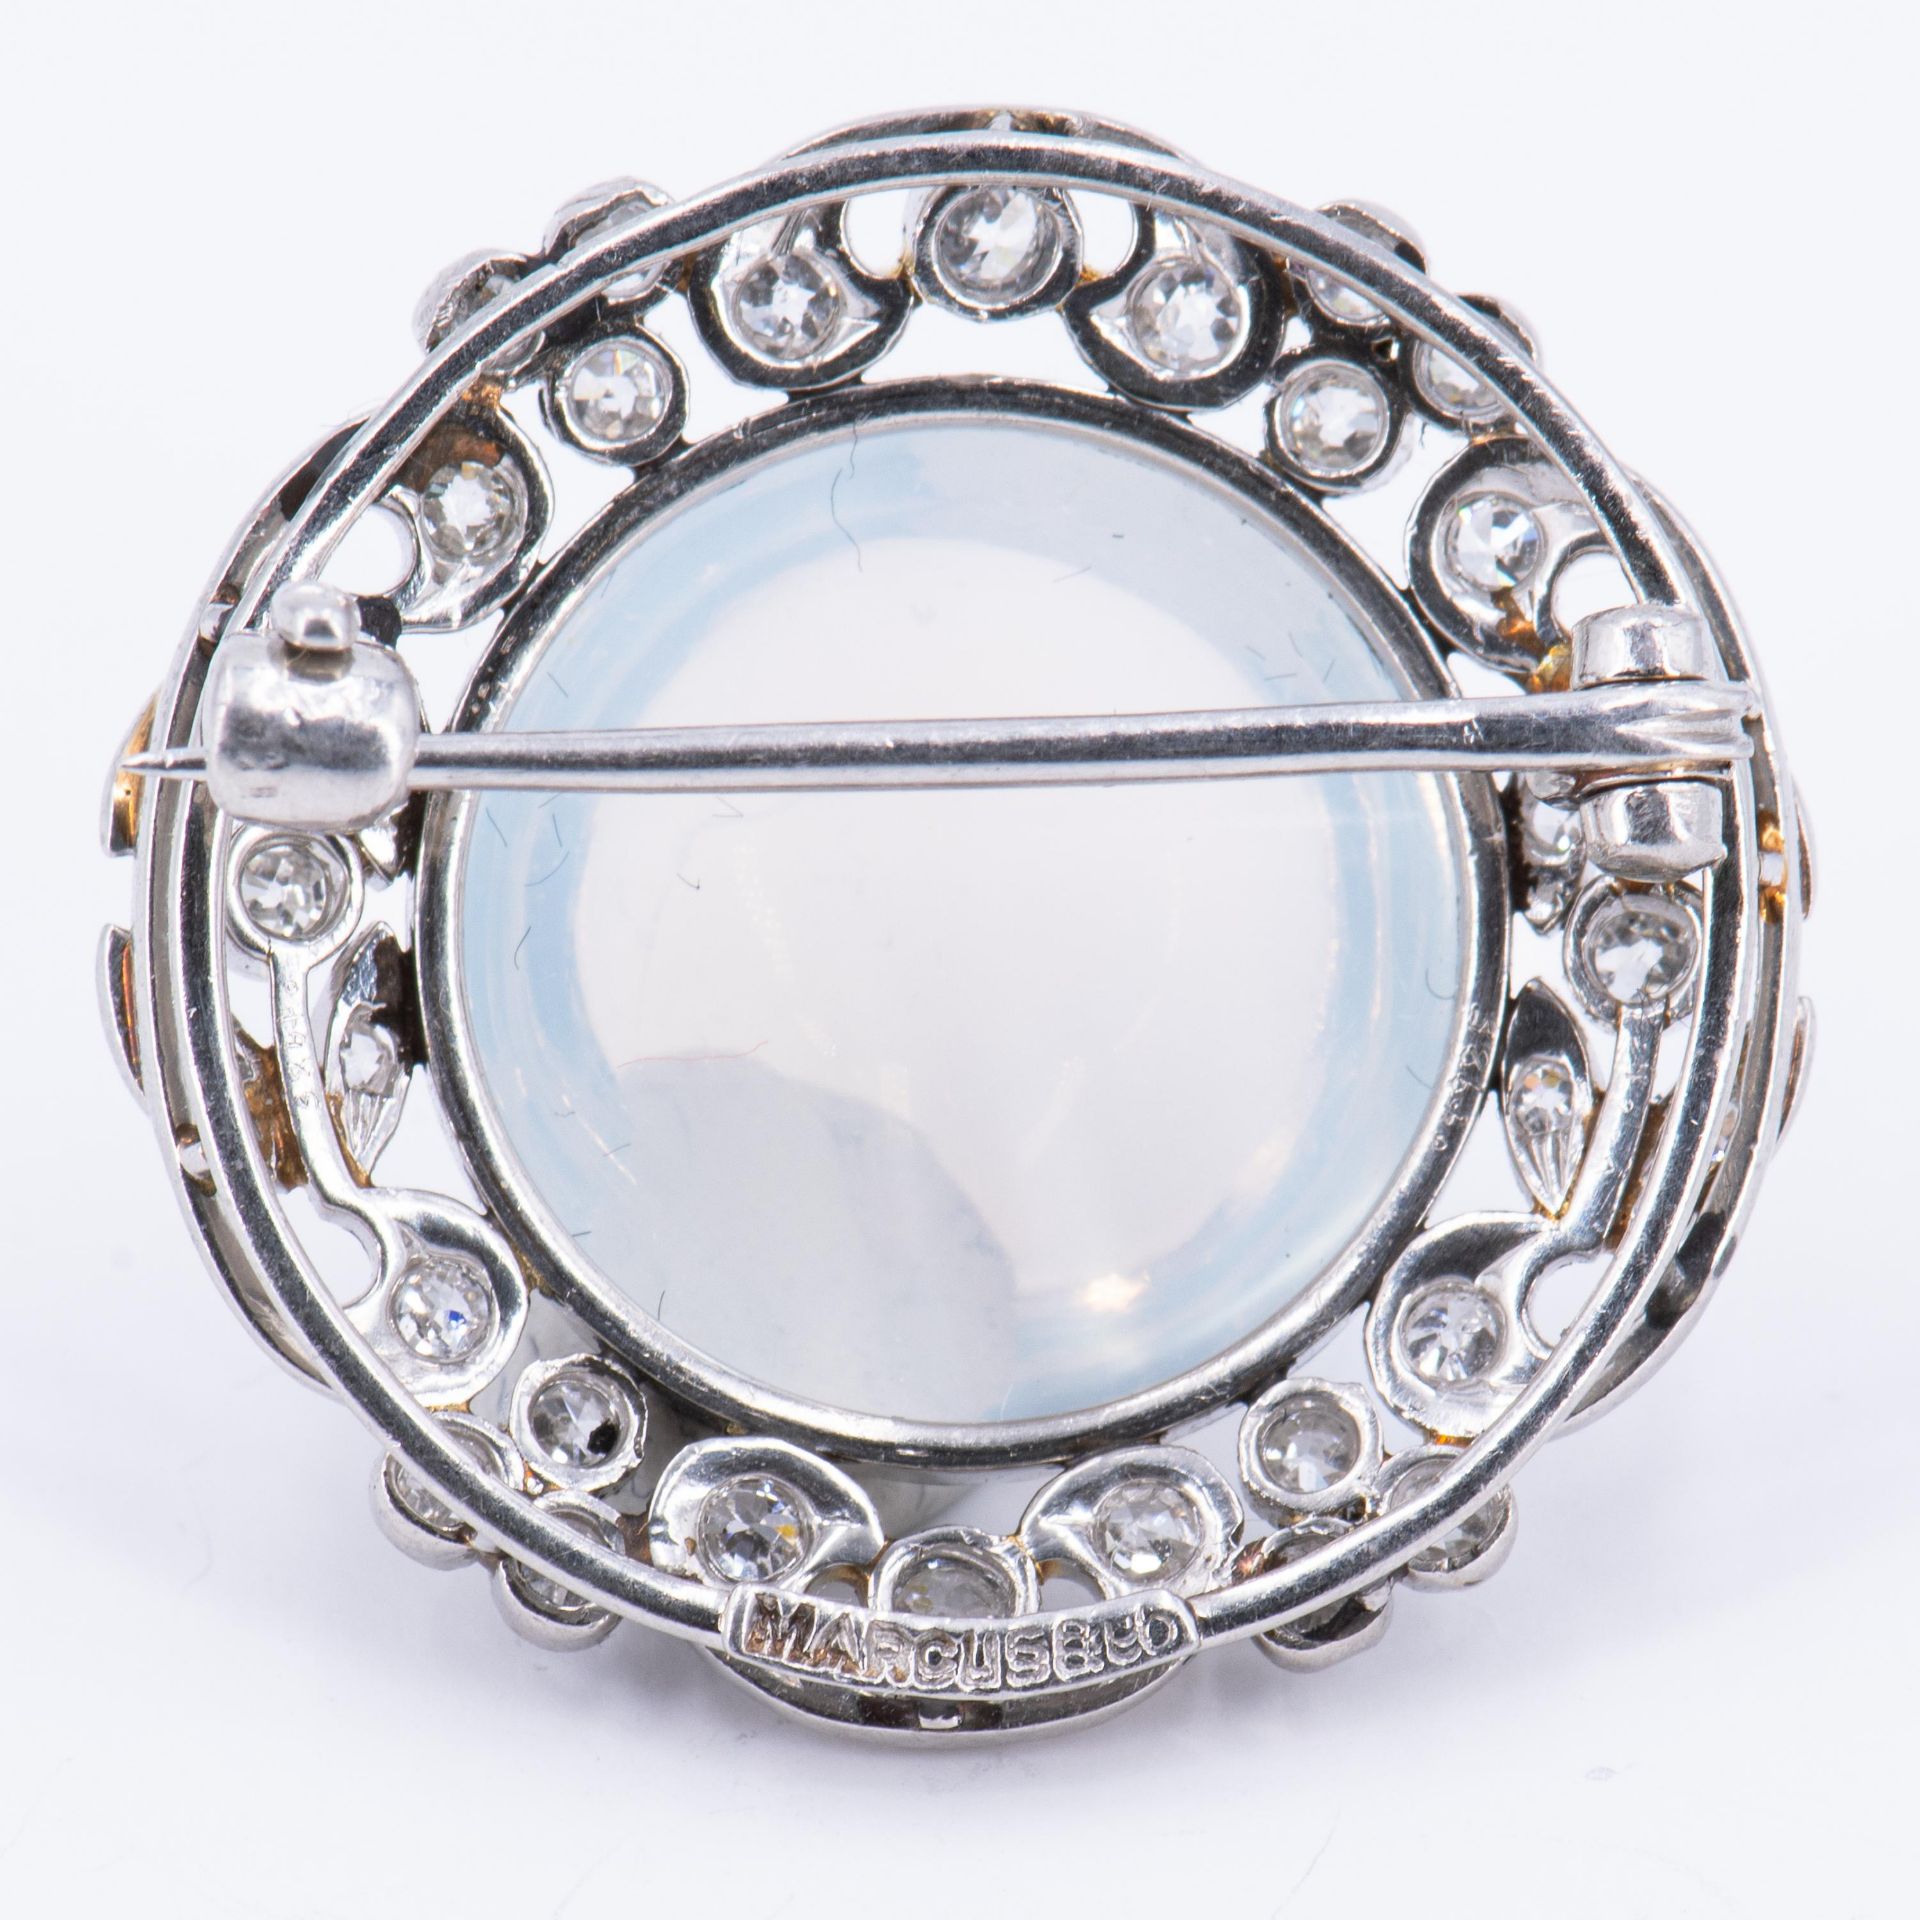 Marcus & Co: Moonstone Diamond Brooch - Image 4 of 4